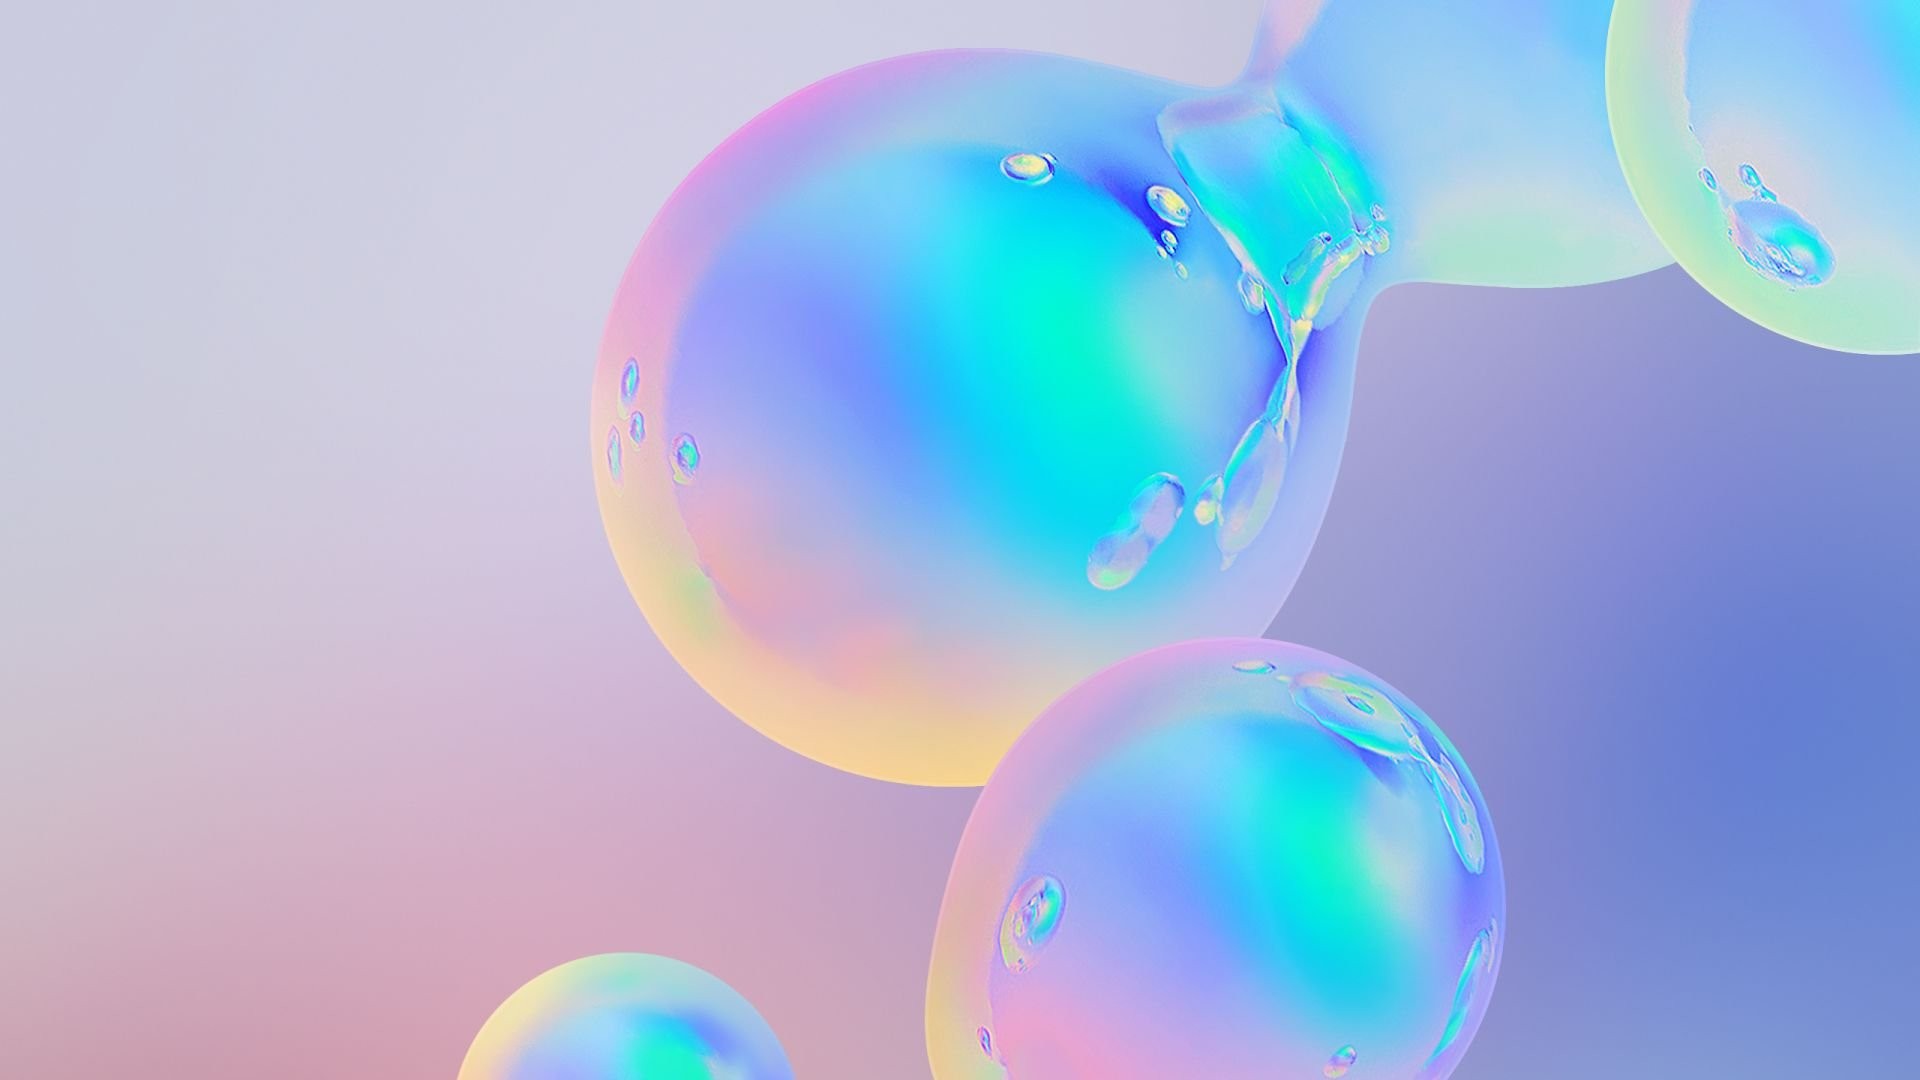 Soap Bubble desktop wallpaper free download